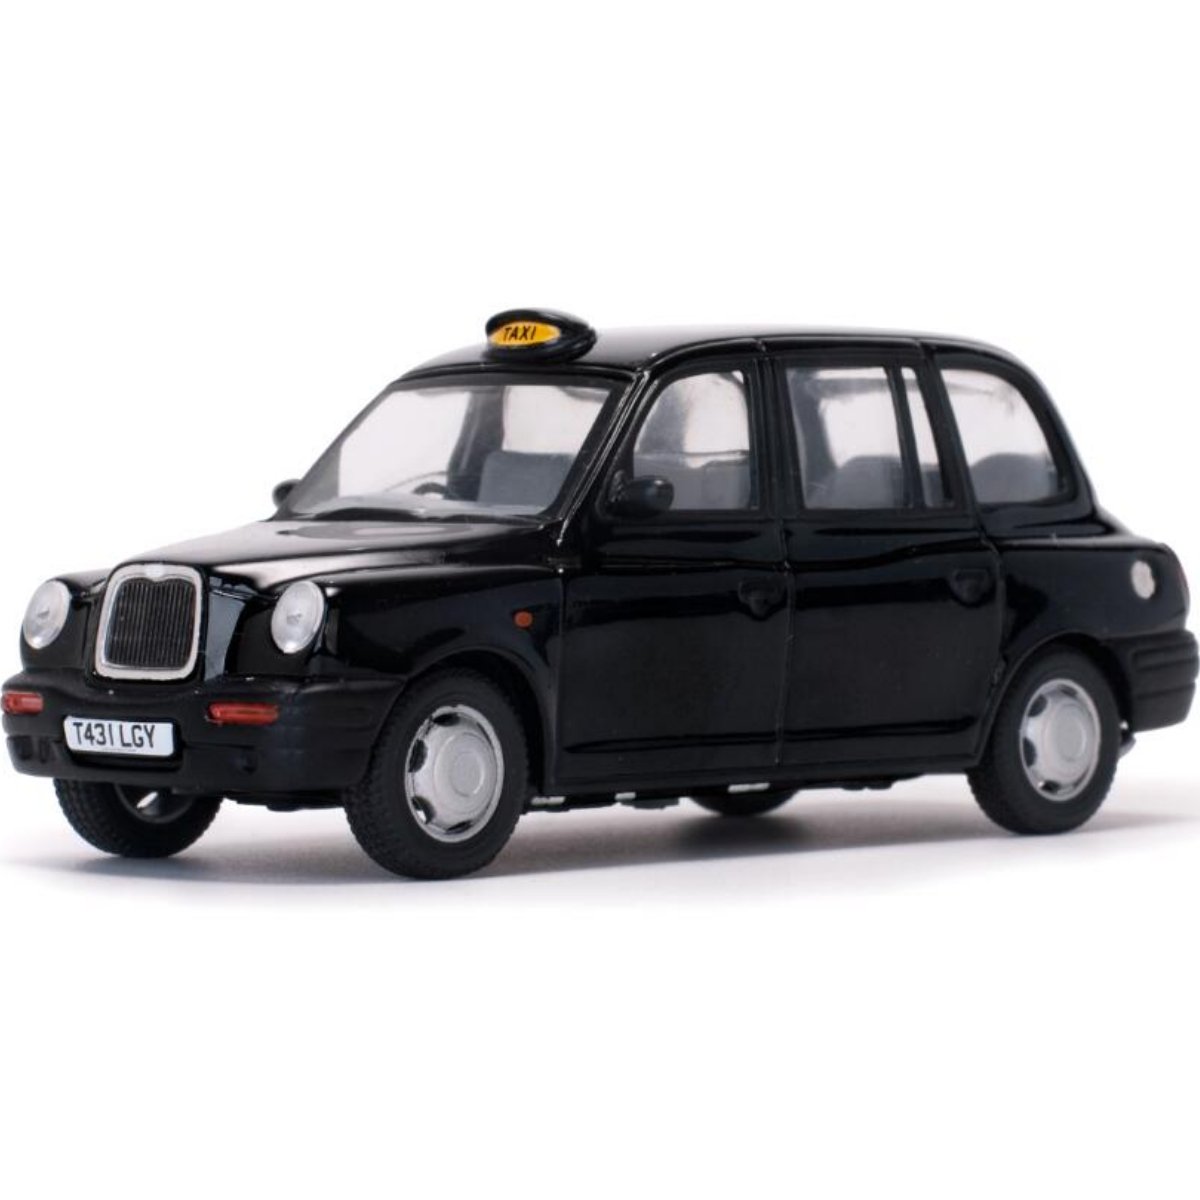 Vitesse 1998 TX1 London Taxi Cab - Black - Phillips Hobbies